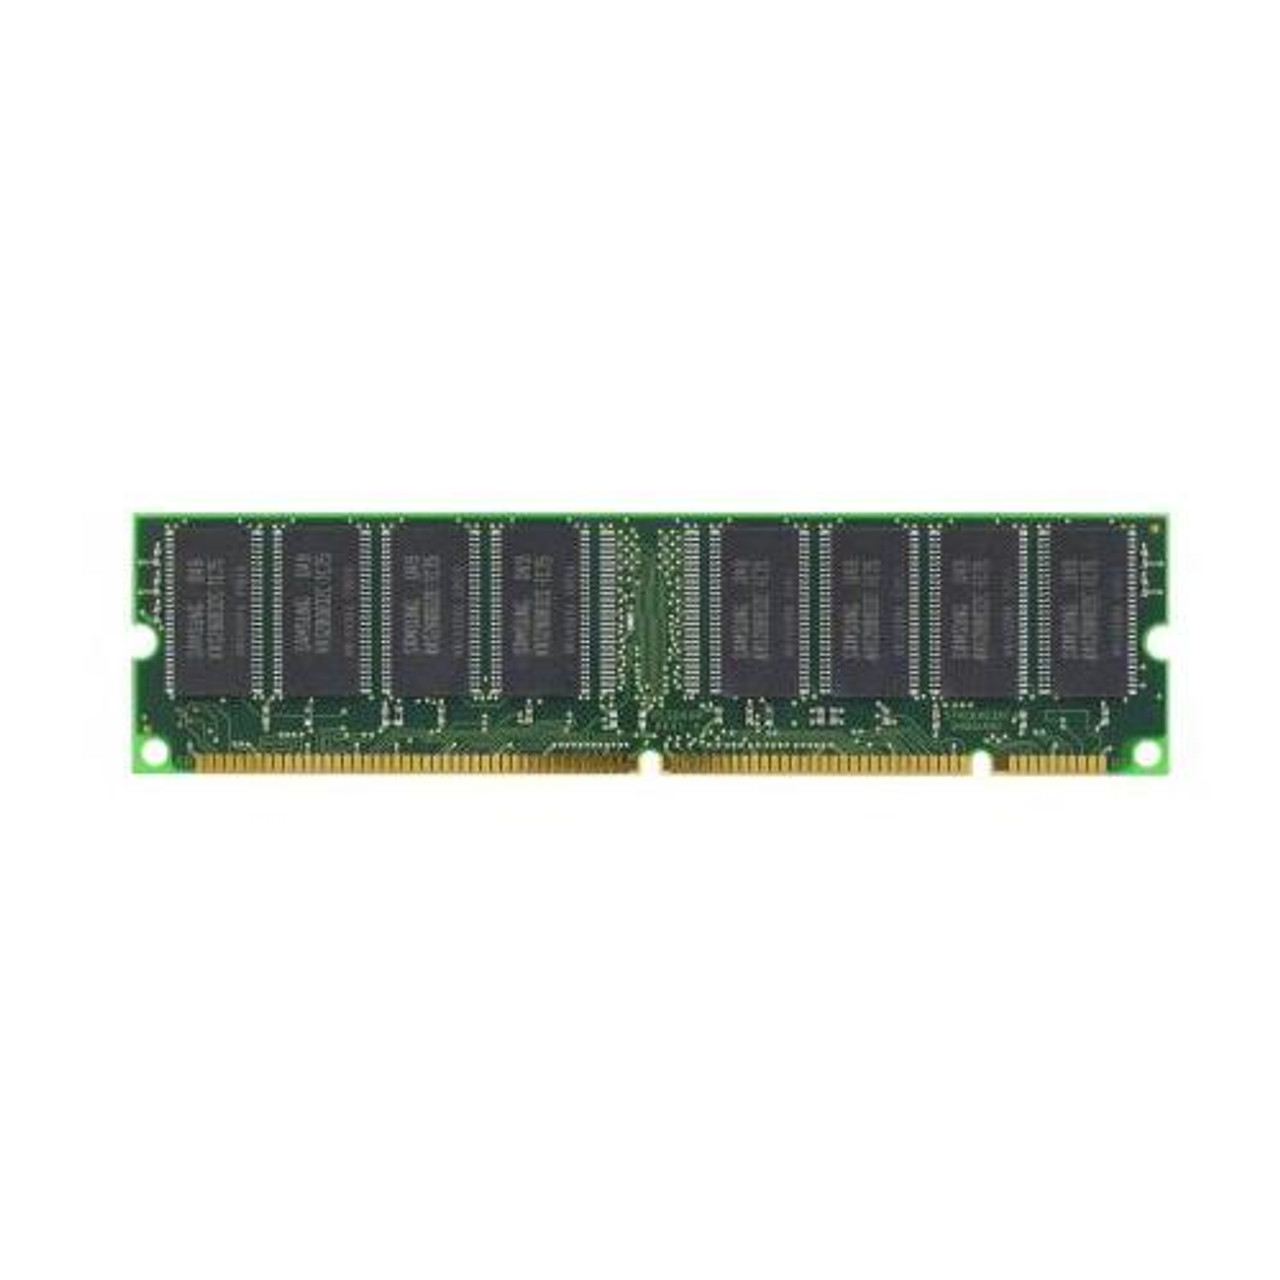 320747-101 Compaq 64MB SDRAM Non ECC PC-100 100Mhz